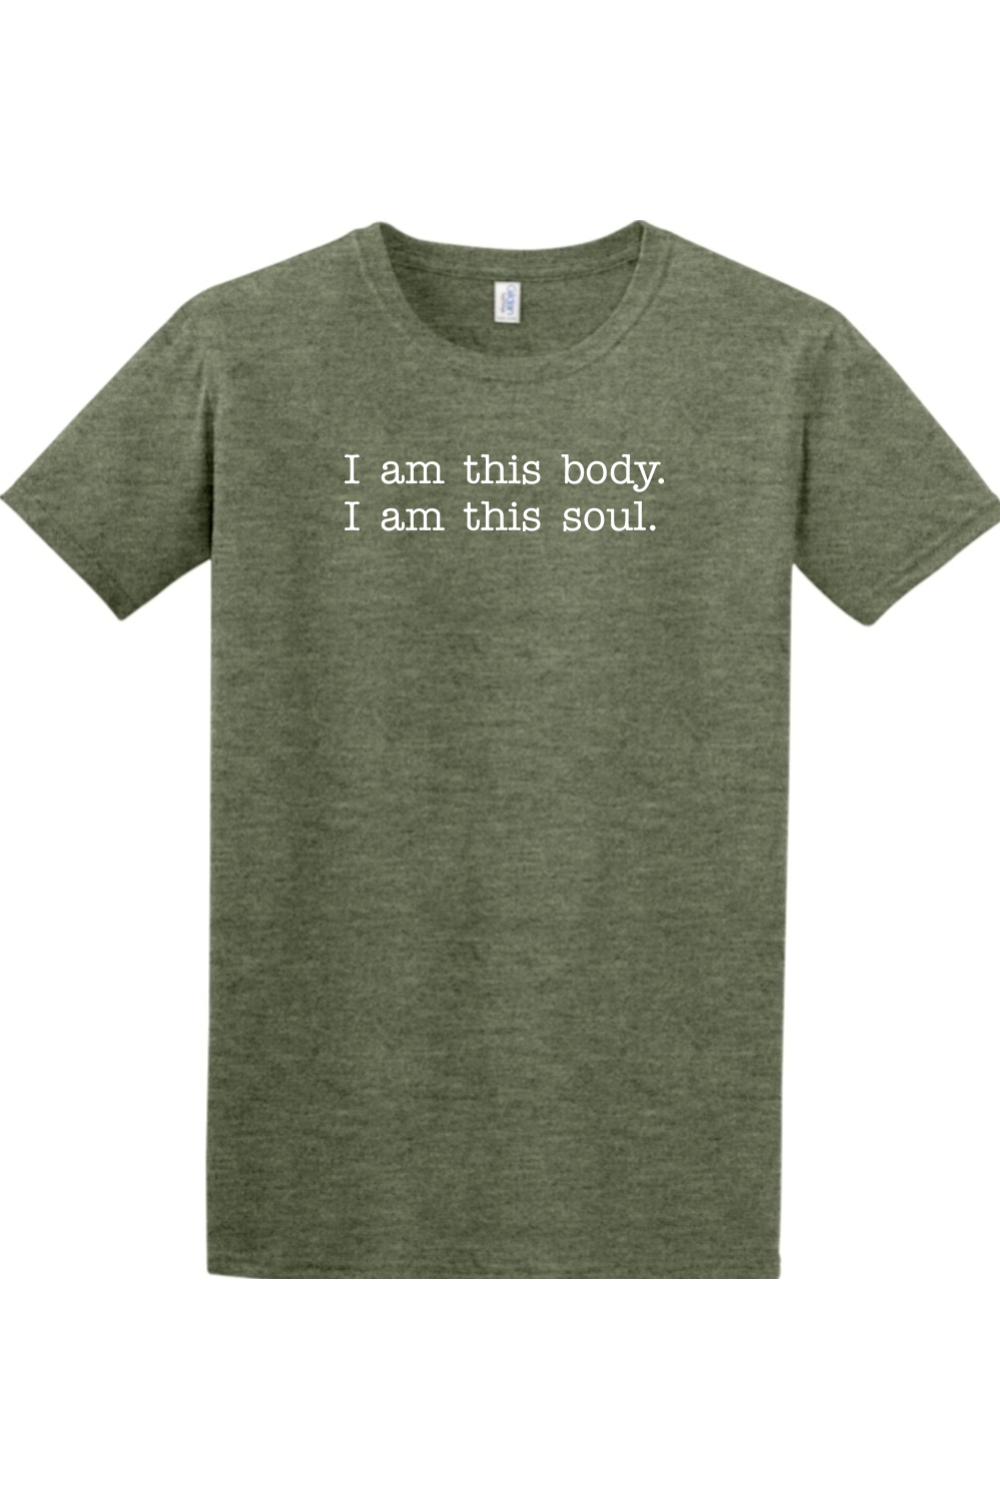 Body/Soul Composite - Human Integrity Adult T-shirt